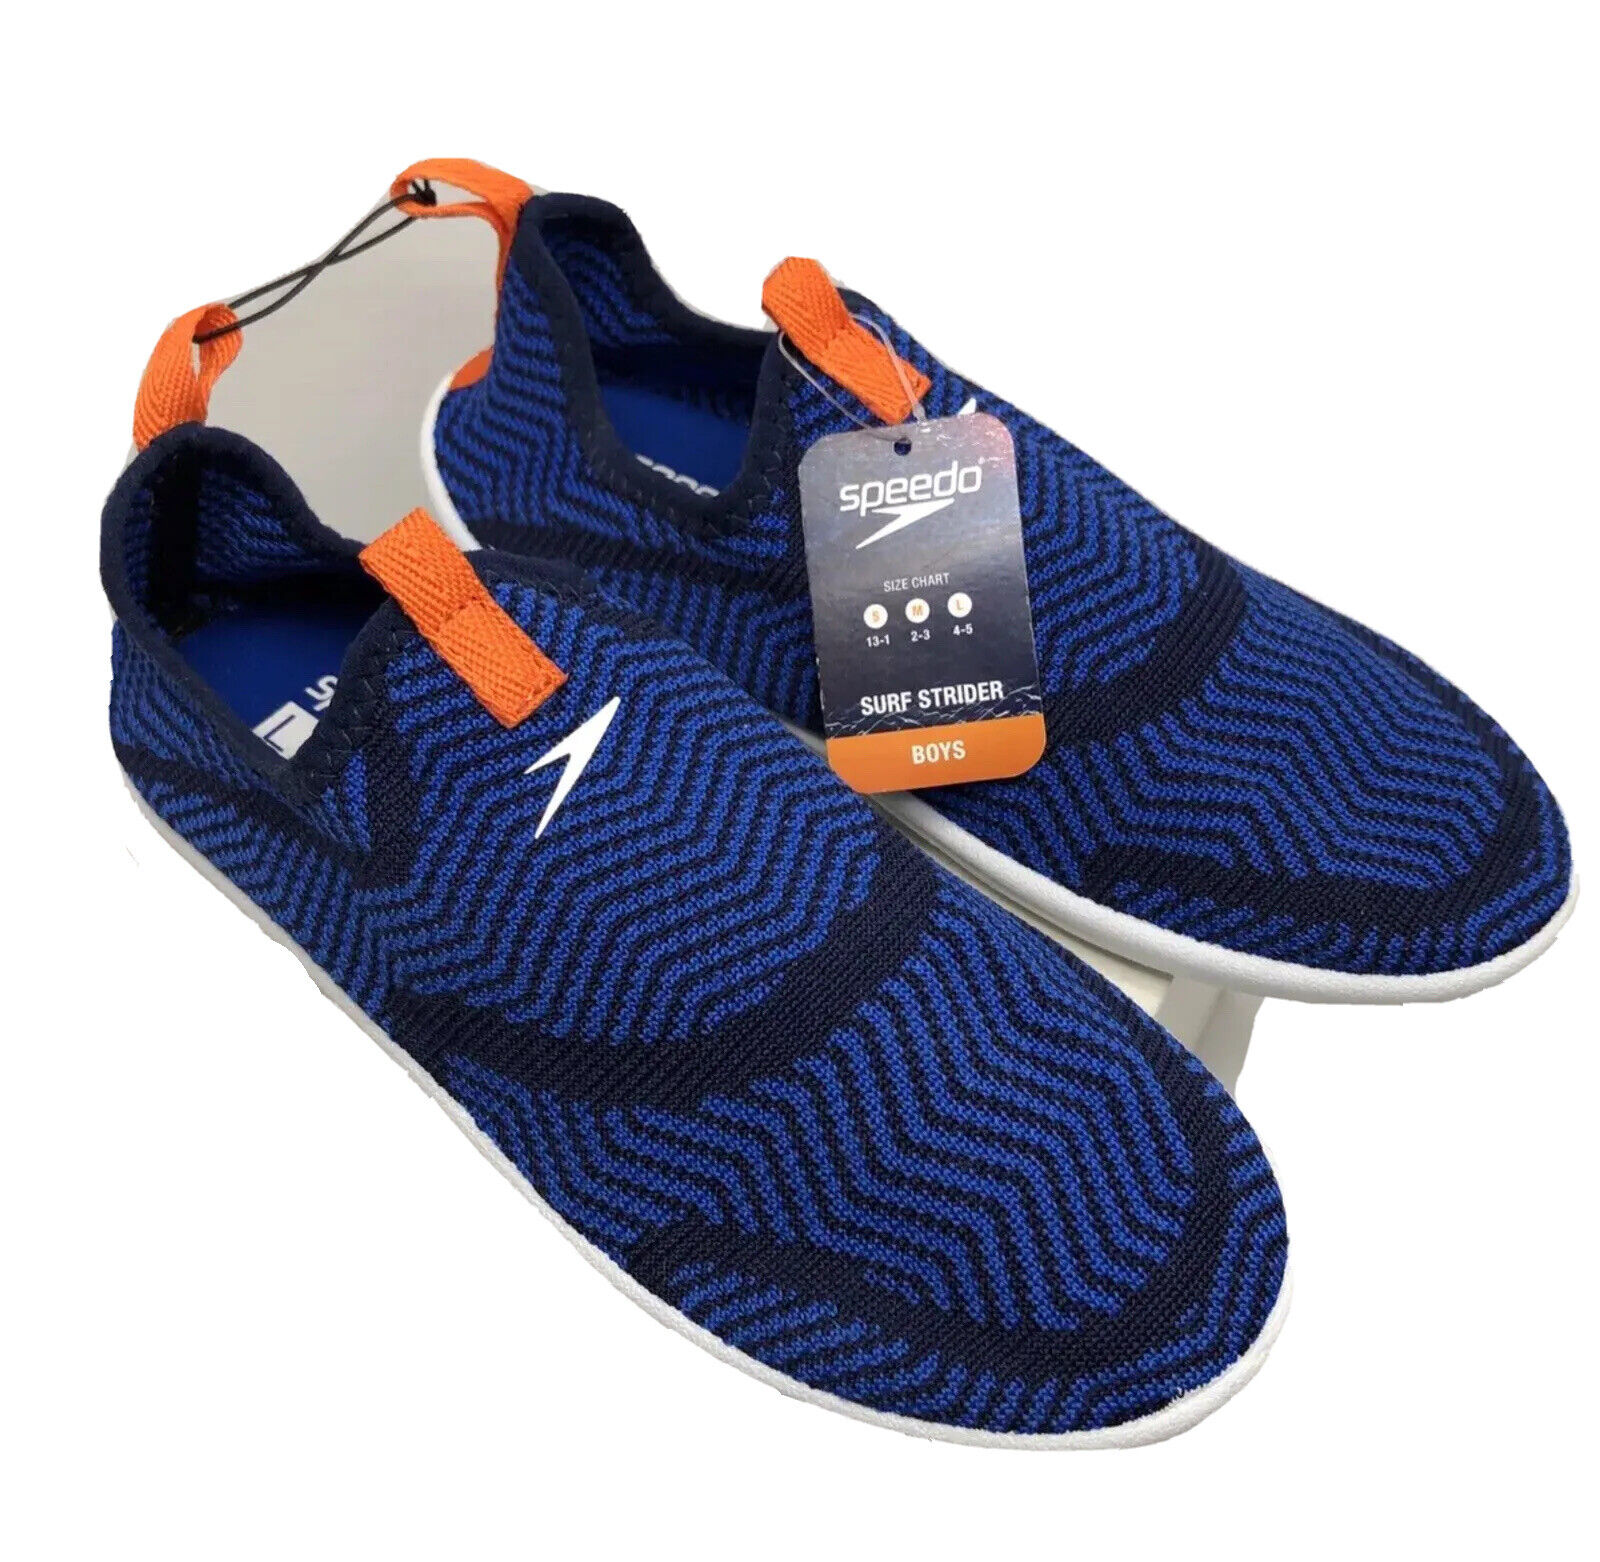 Nwt Speedo Surf Strider Ultralight Water Shoes Junior Boys Size 4-5 Blue Swim